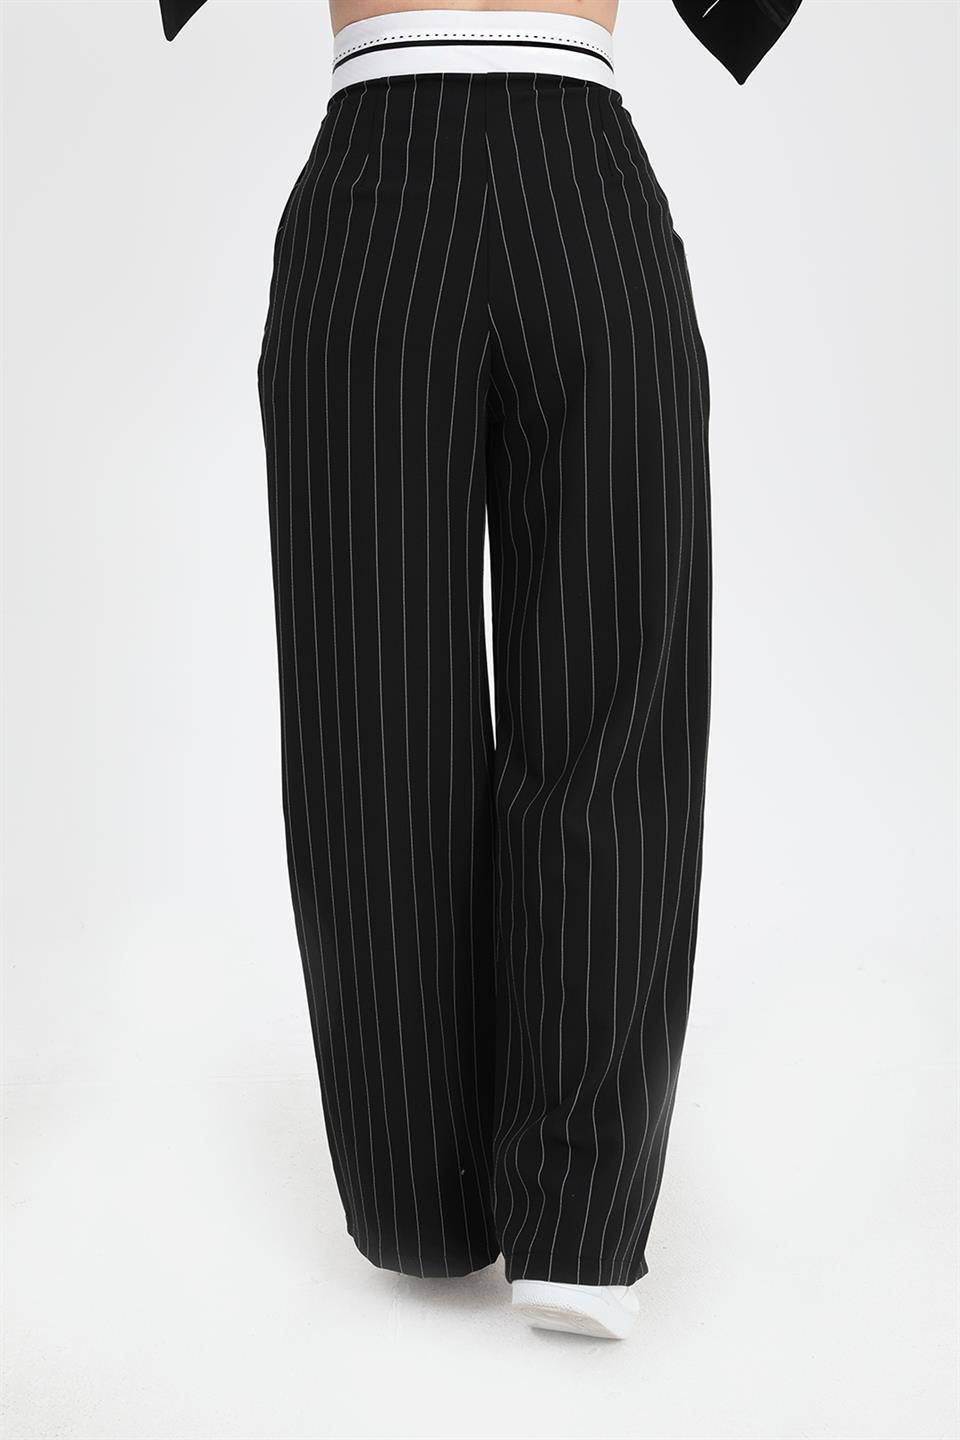 Women's Trousers Garni Belted Wide Striped - Black - STREETMODE ™